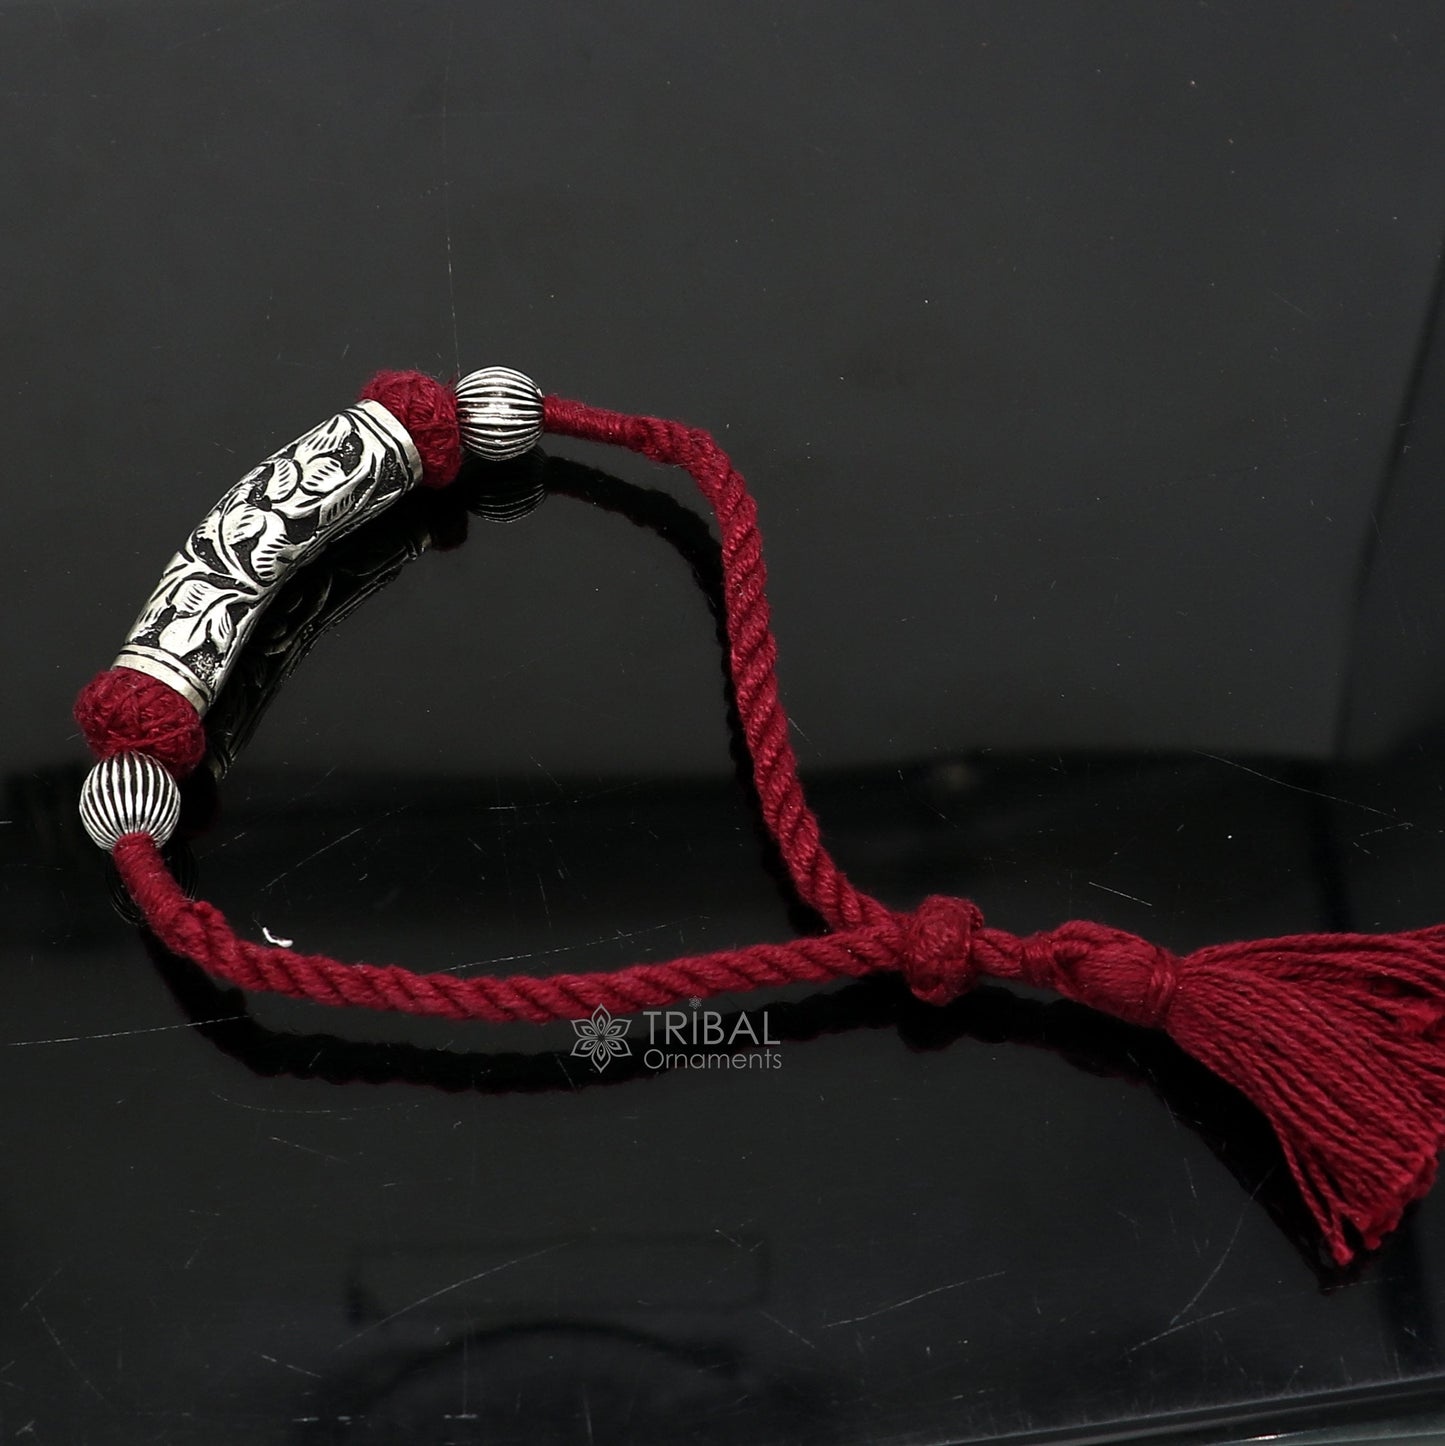 925 sterling silver modern Fancy stylish charm bracelet, adjustable brides gifting fashion wedding ethnic bracelet tribal jewelry sbr681 - TRIBAL ORNAMENTS